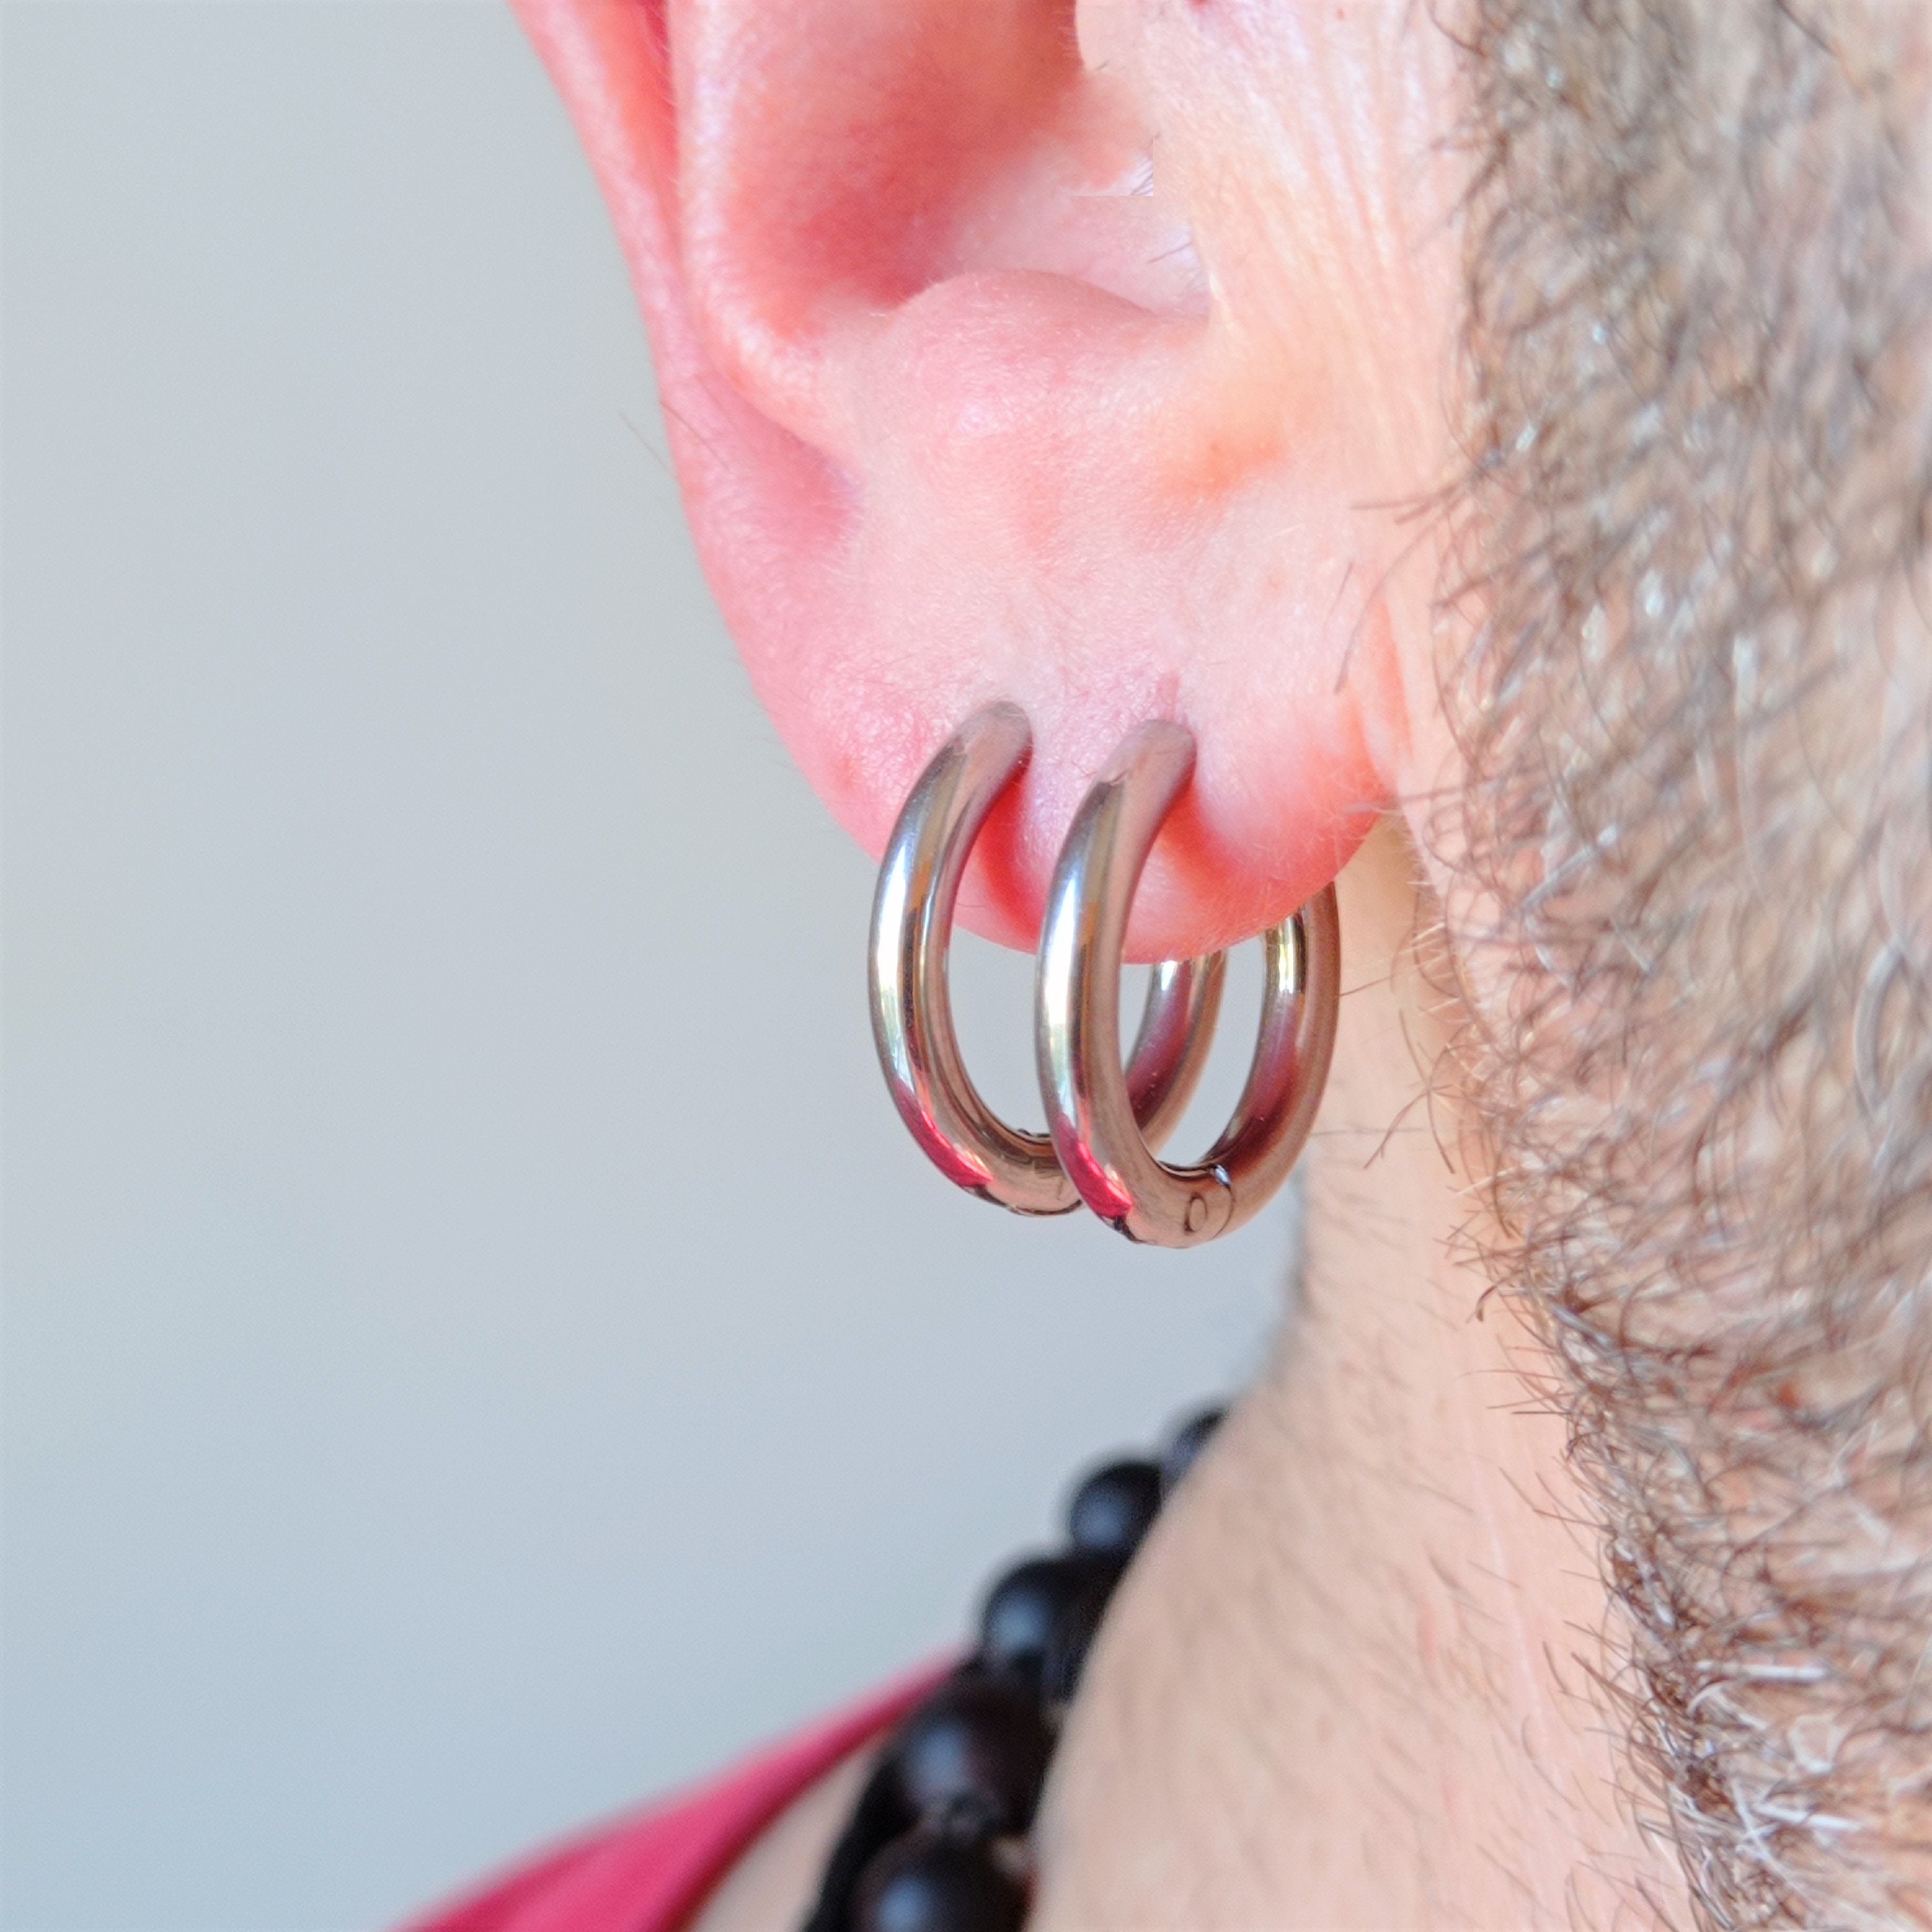 New Fashion Men's Stainless Steel No Piercing Ear Clips Stud Earrings for  Men Boucles D Oreilles Homme